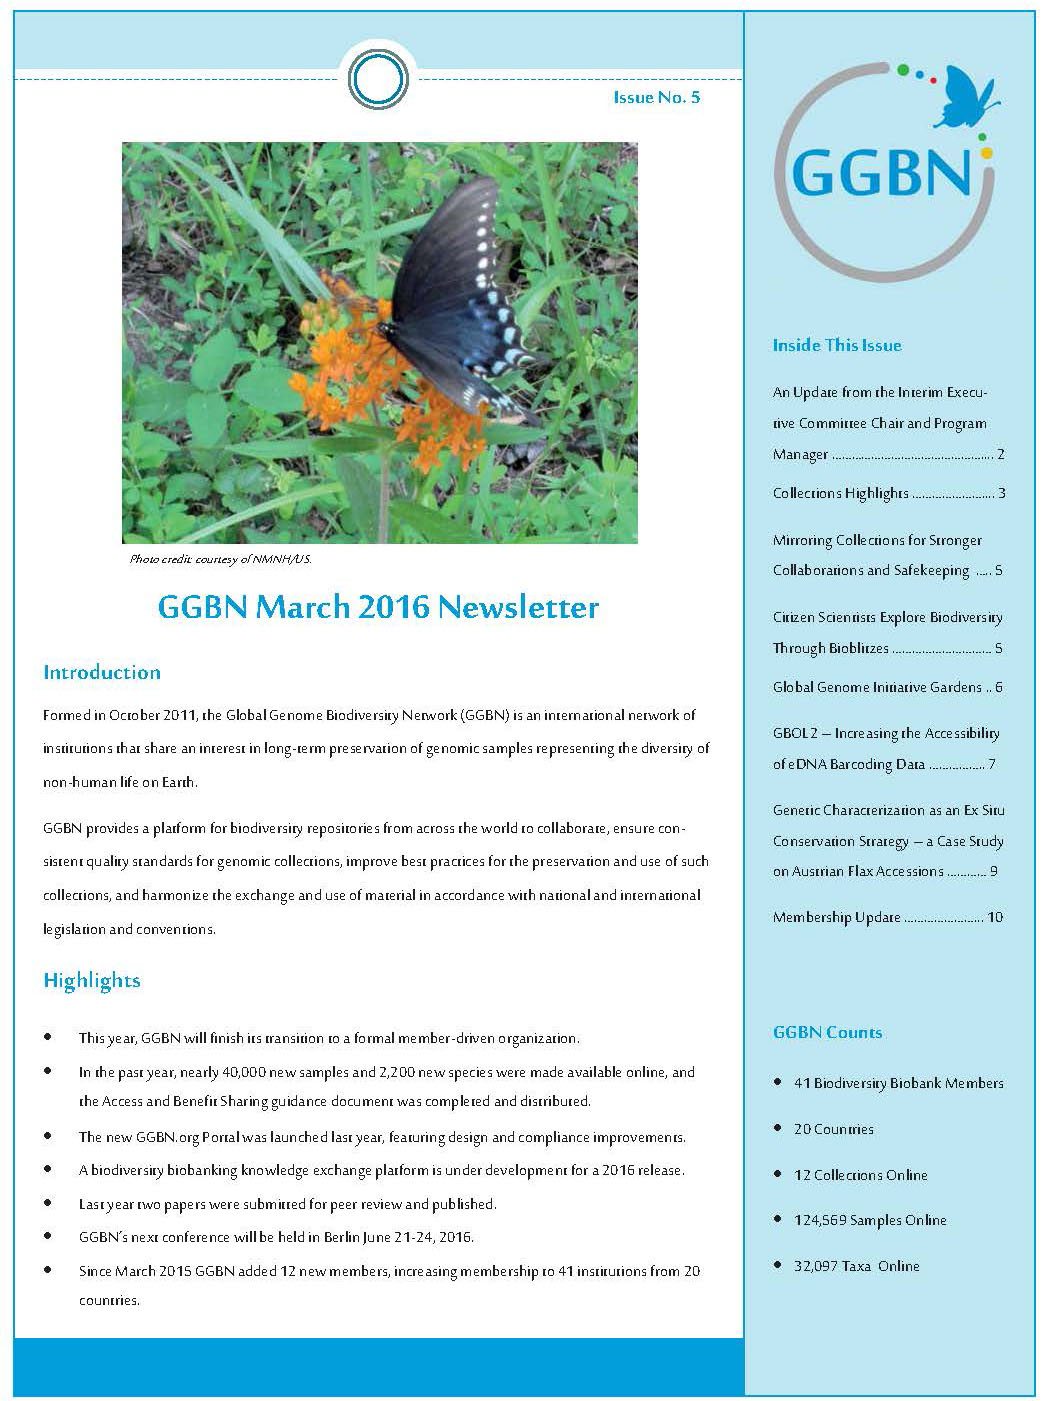 GGBN2016Newsletter.jpg